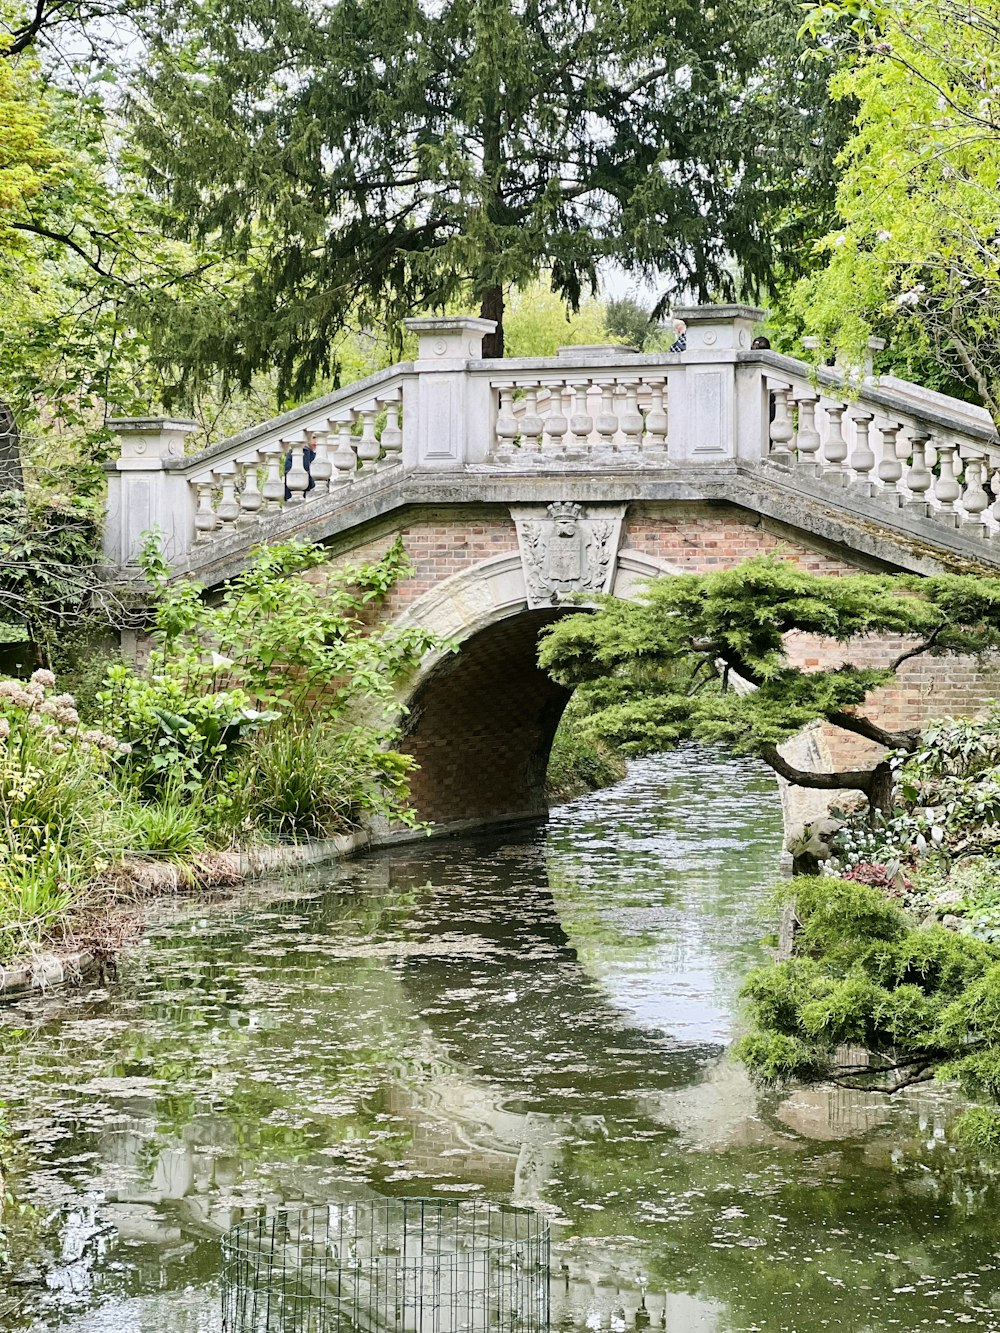 a bridge over a small river in a park